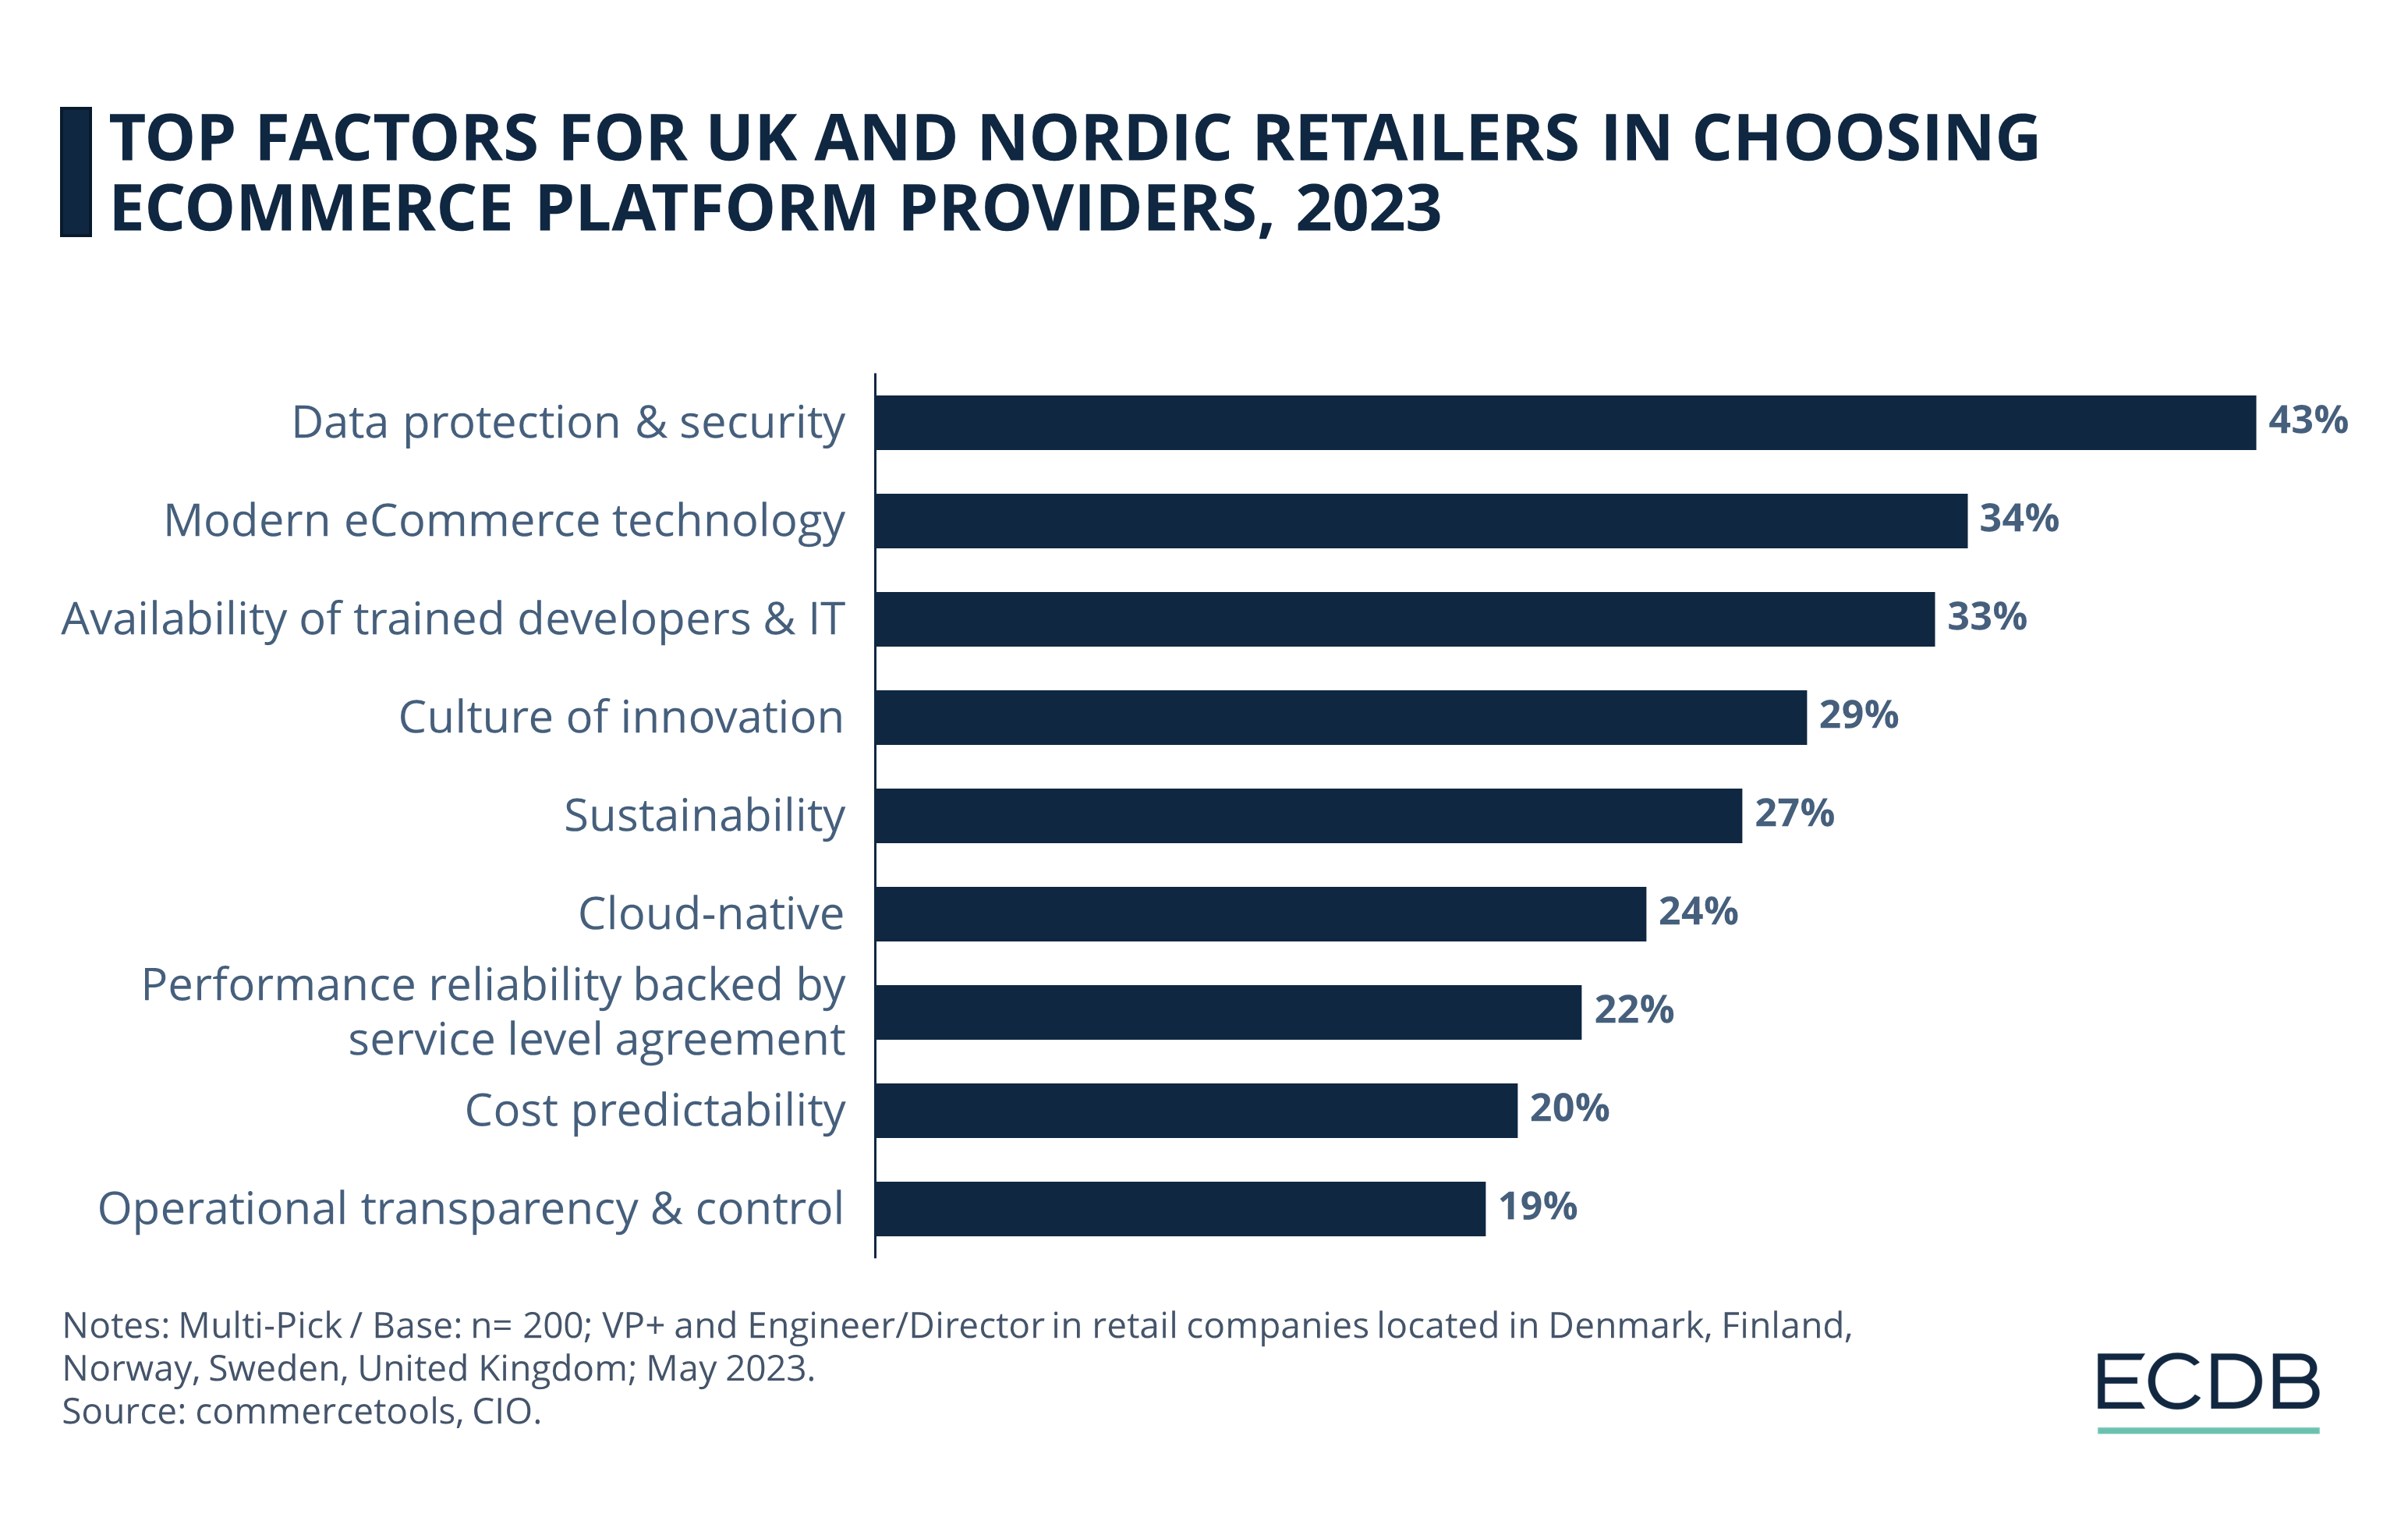 Top Factors for UK and Nordic Retailers in Choosing eCommerce Platform Providers, 2023